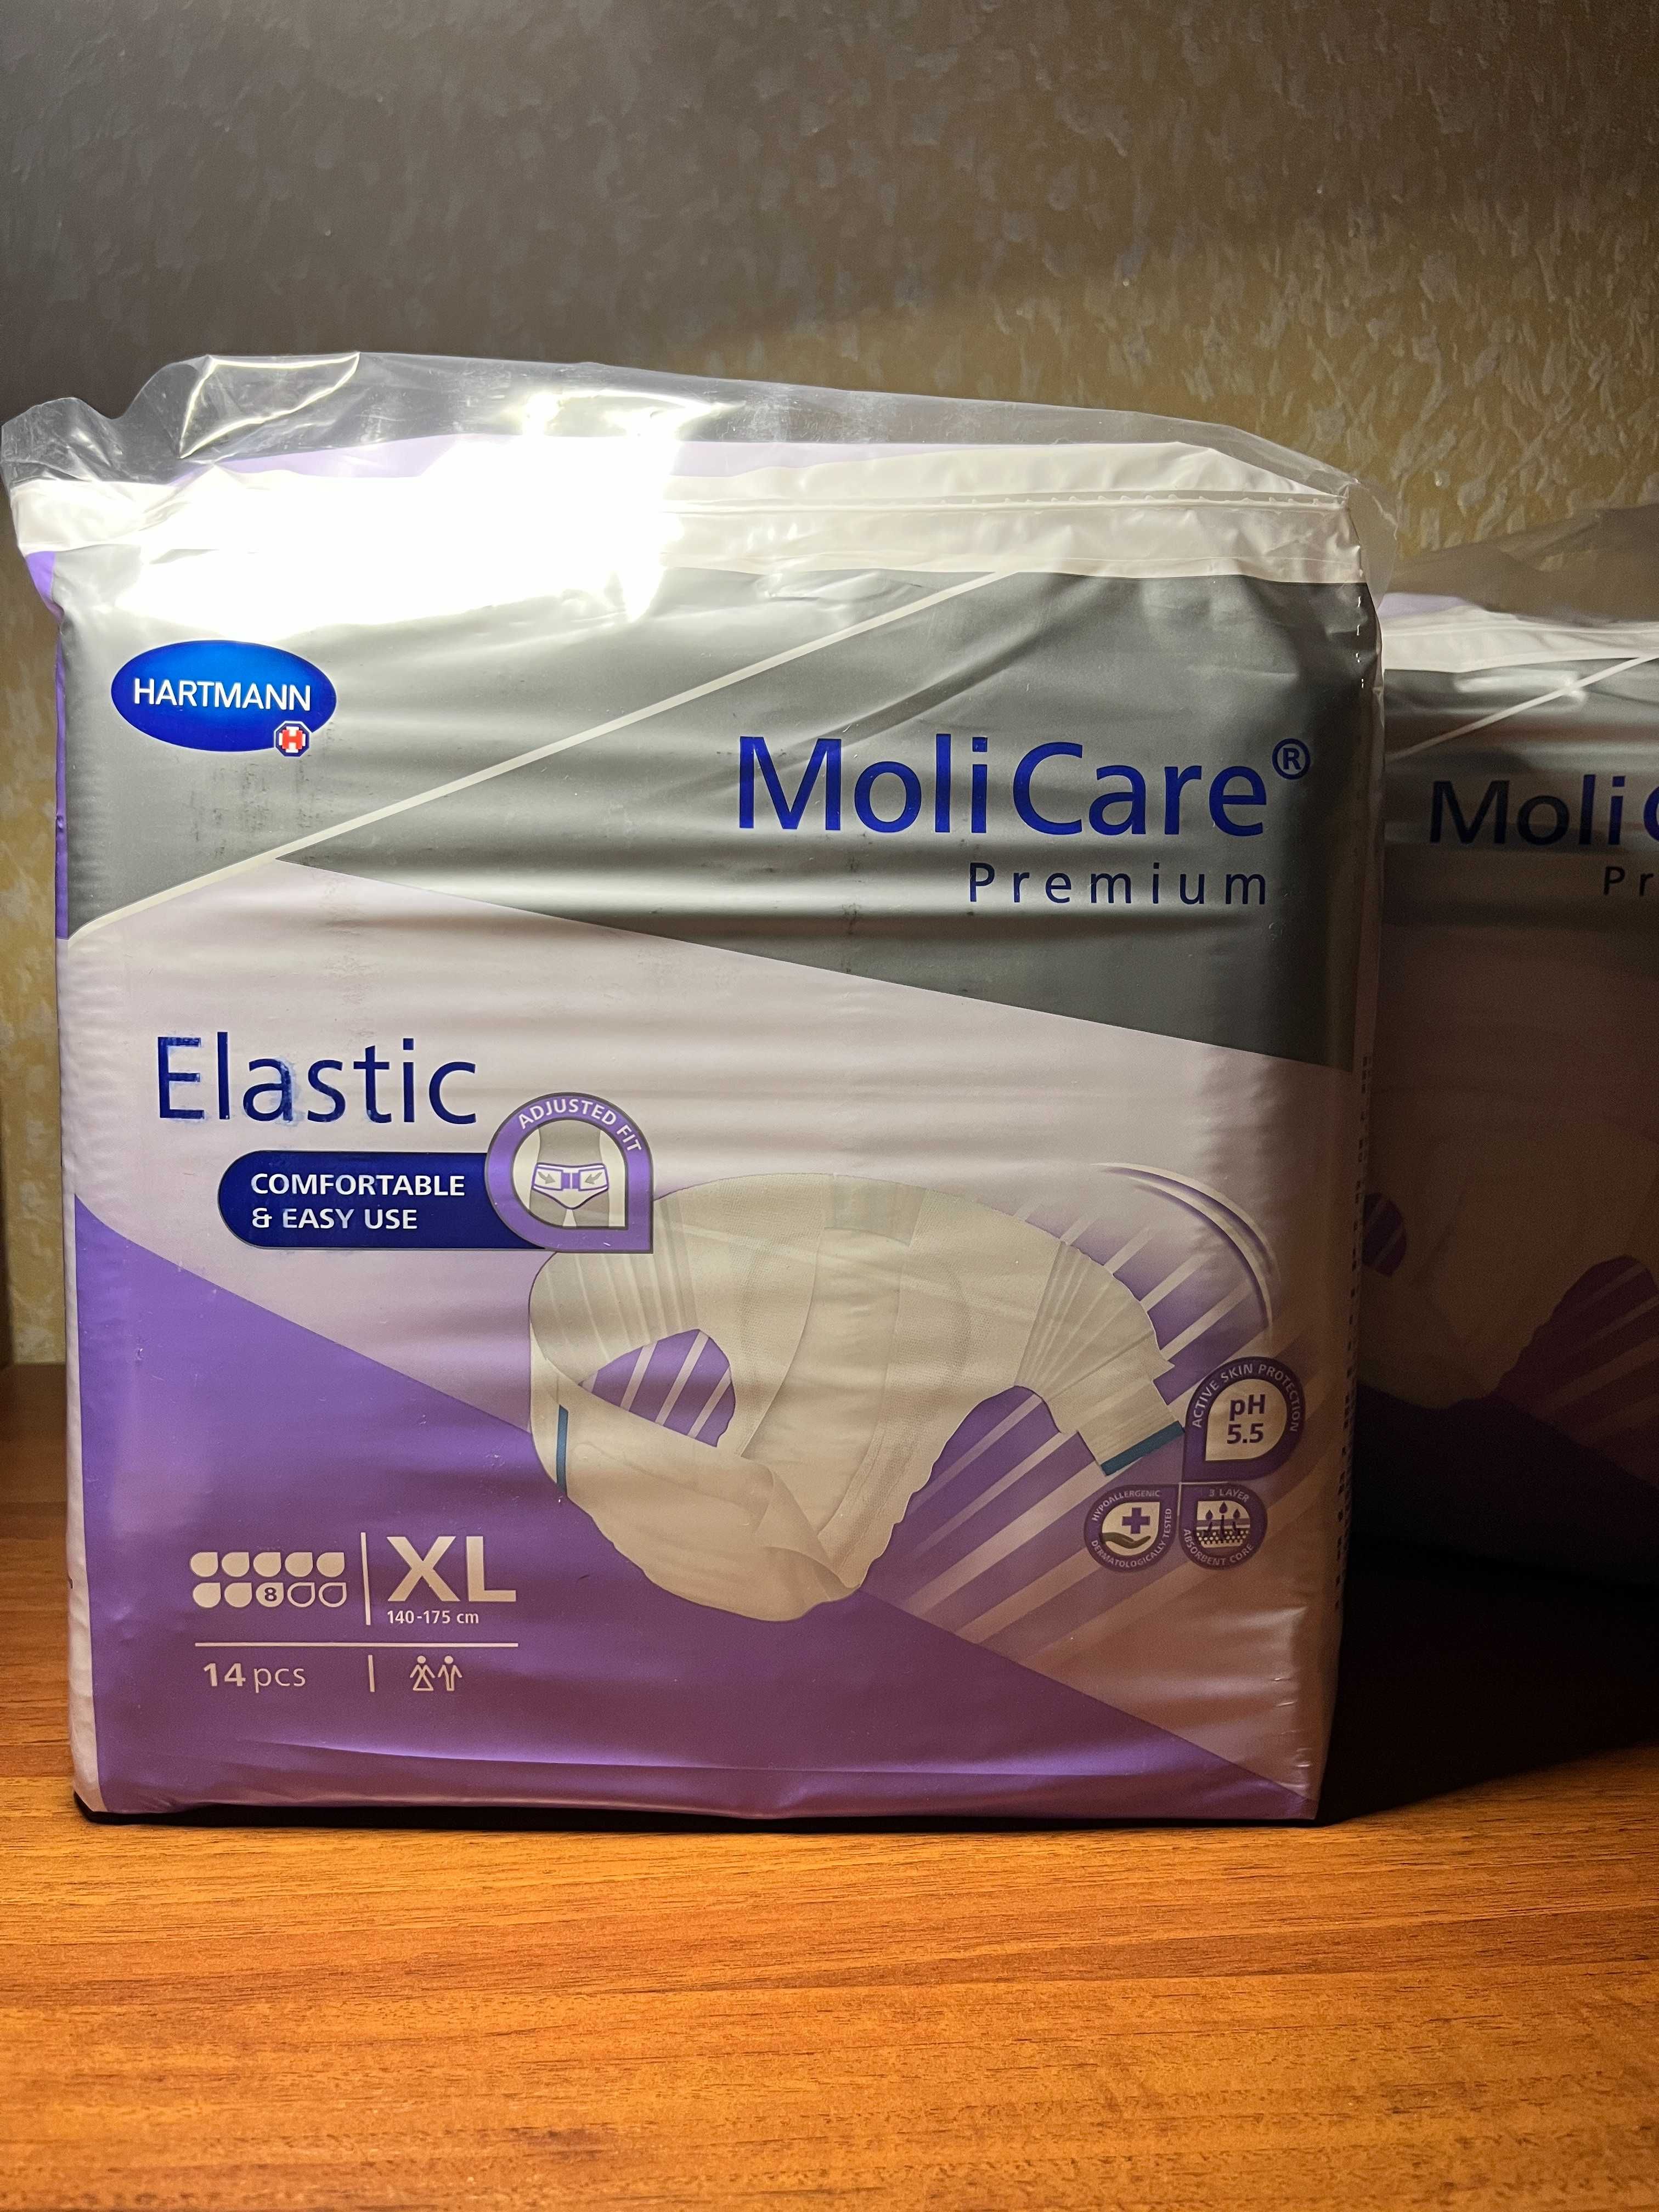 Підгузки/памперси для дорослих MoliCare Premium Elastic XL (140-175cm)